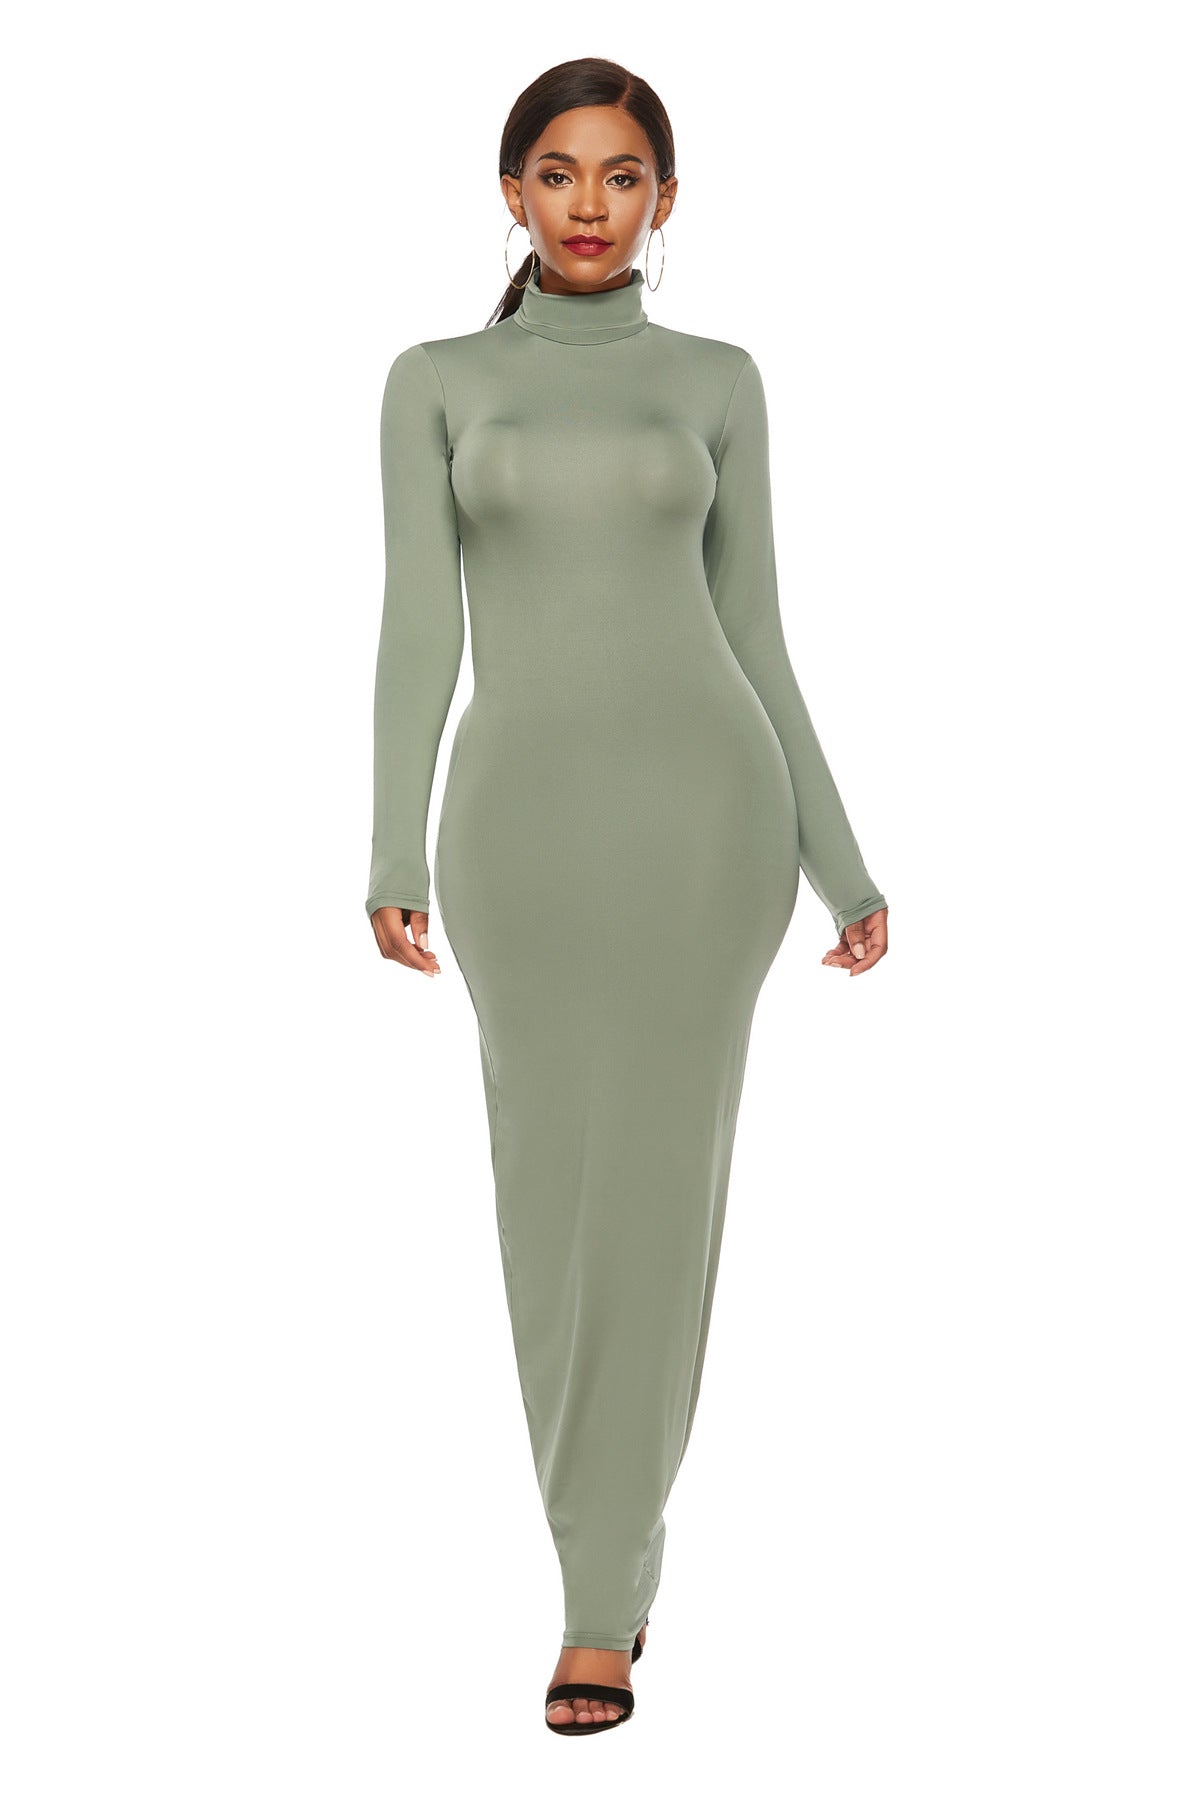 Women's Polyester Spandex Fashion Solid Color Long Sleeve Stretch Slim Turtleneck Dress